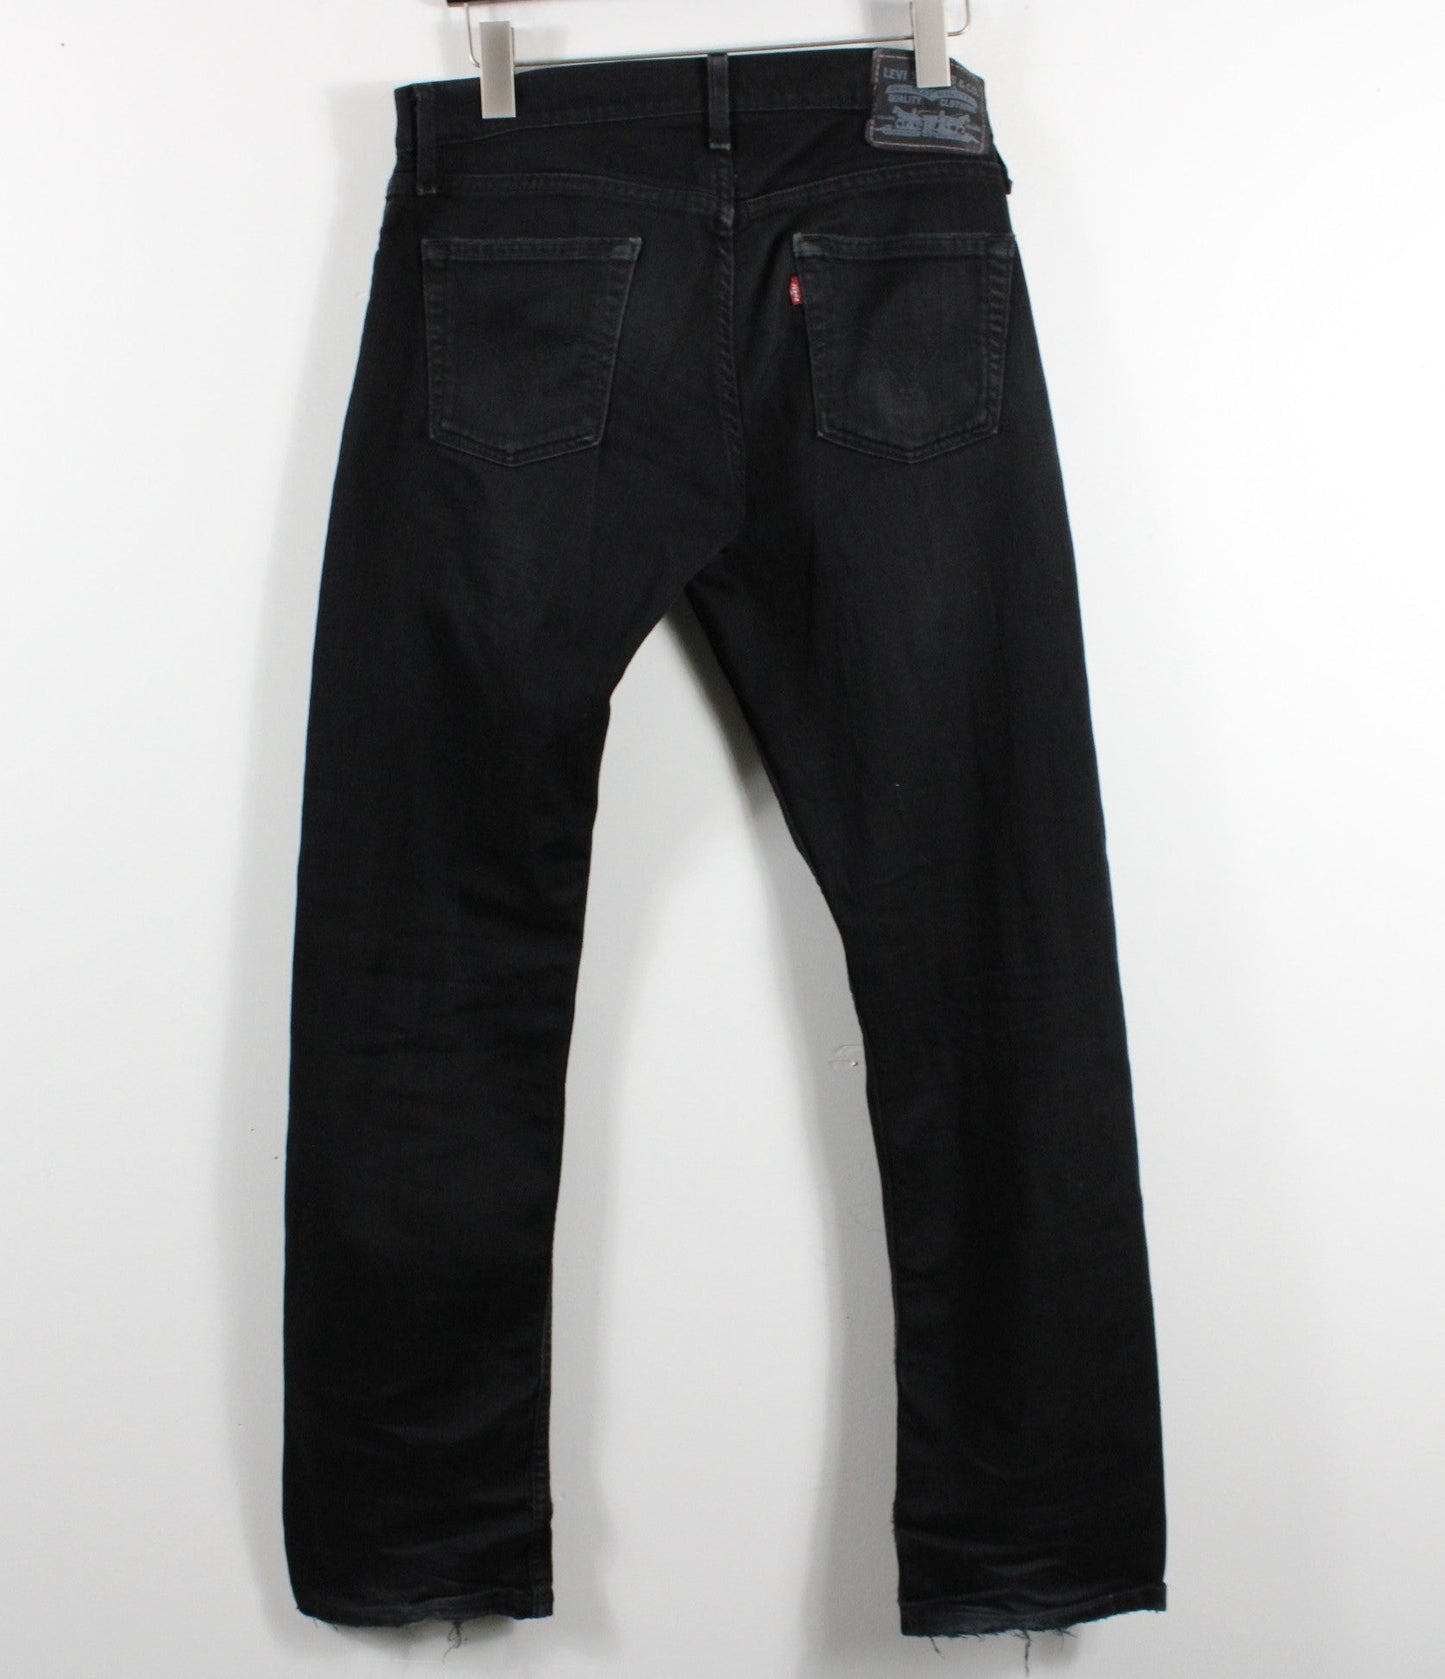 Levi's 514 Black Denim Jeans